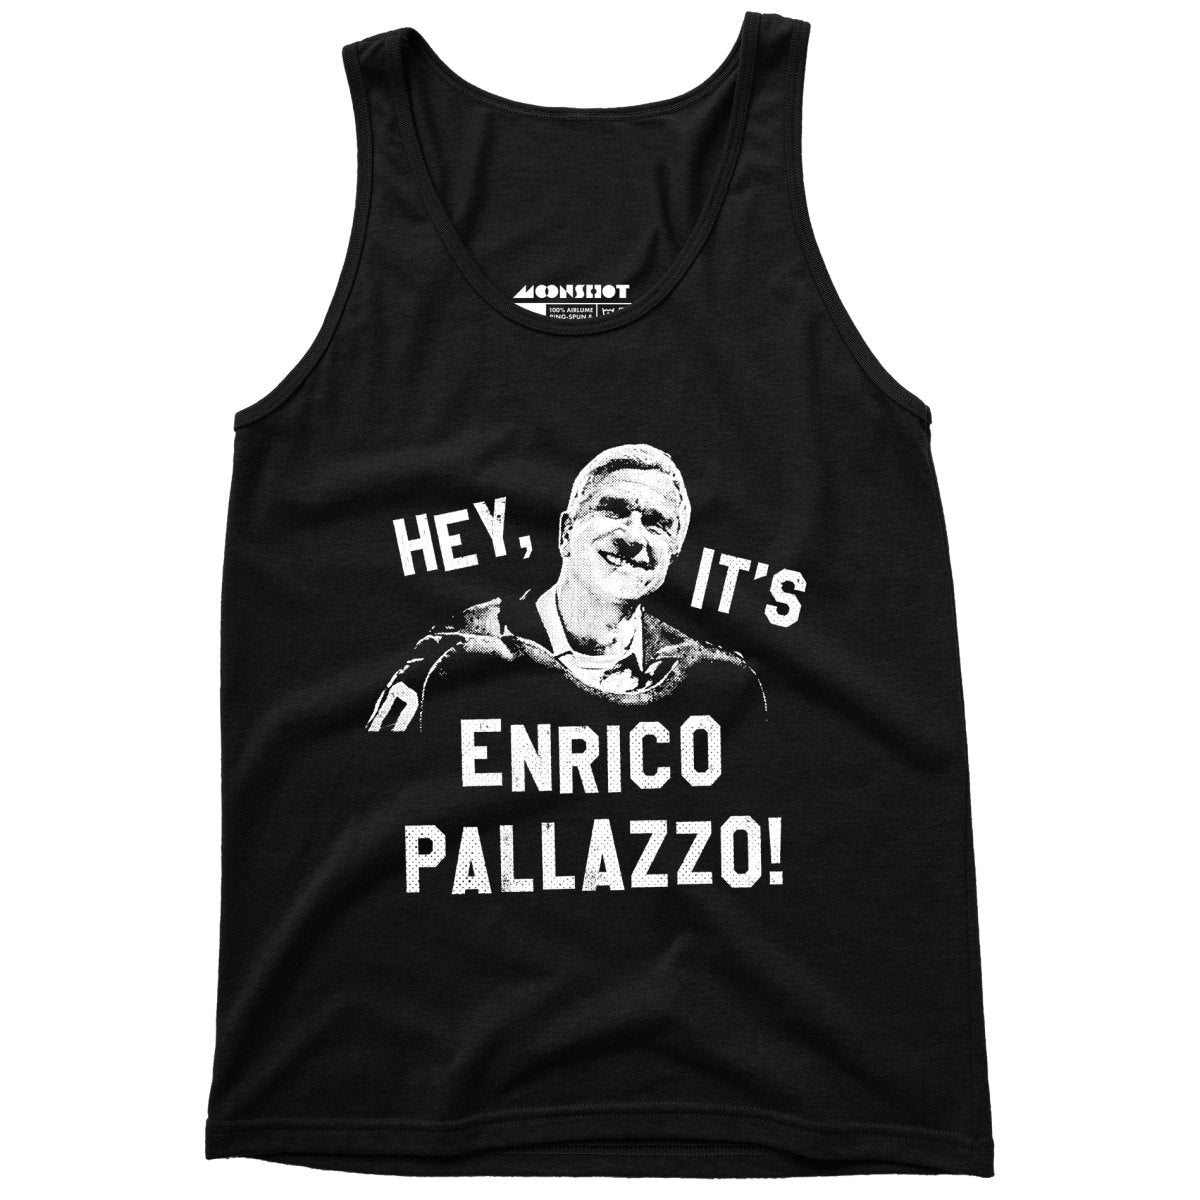 Hey, It's Enrico Pallazzo! - Unisex Tank Top